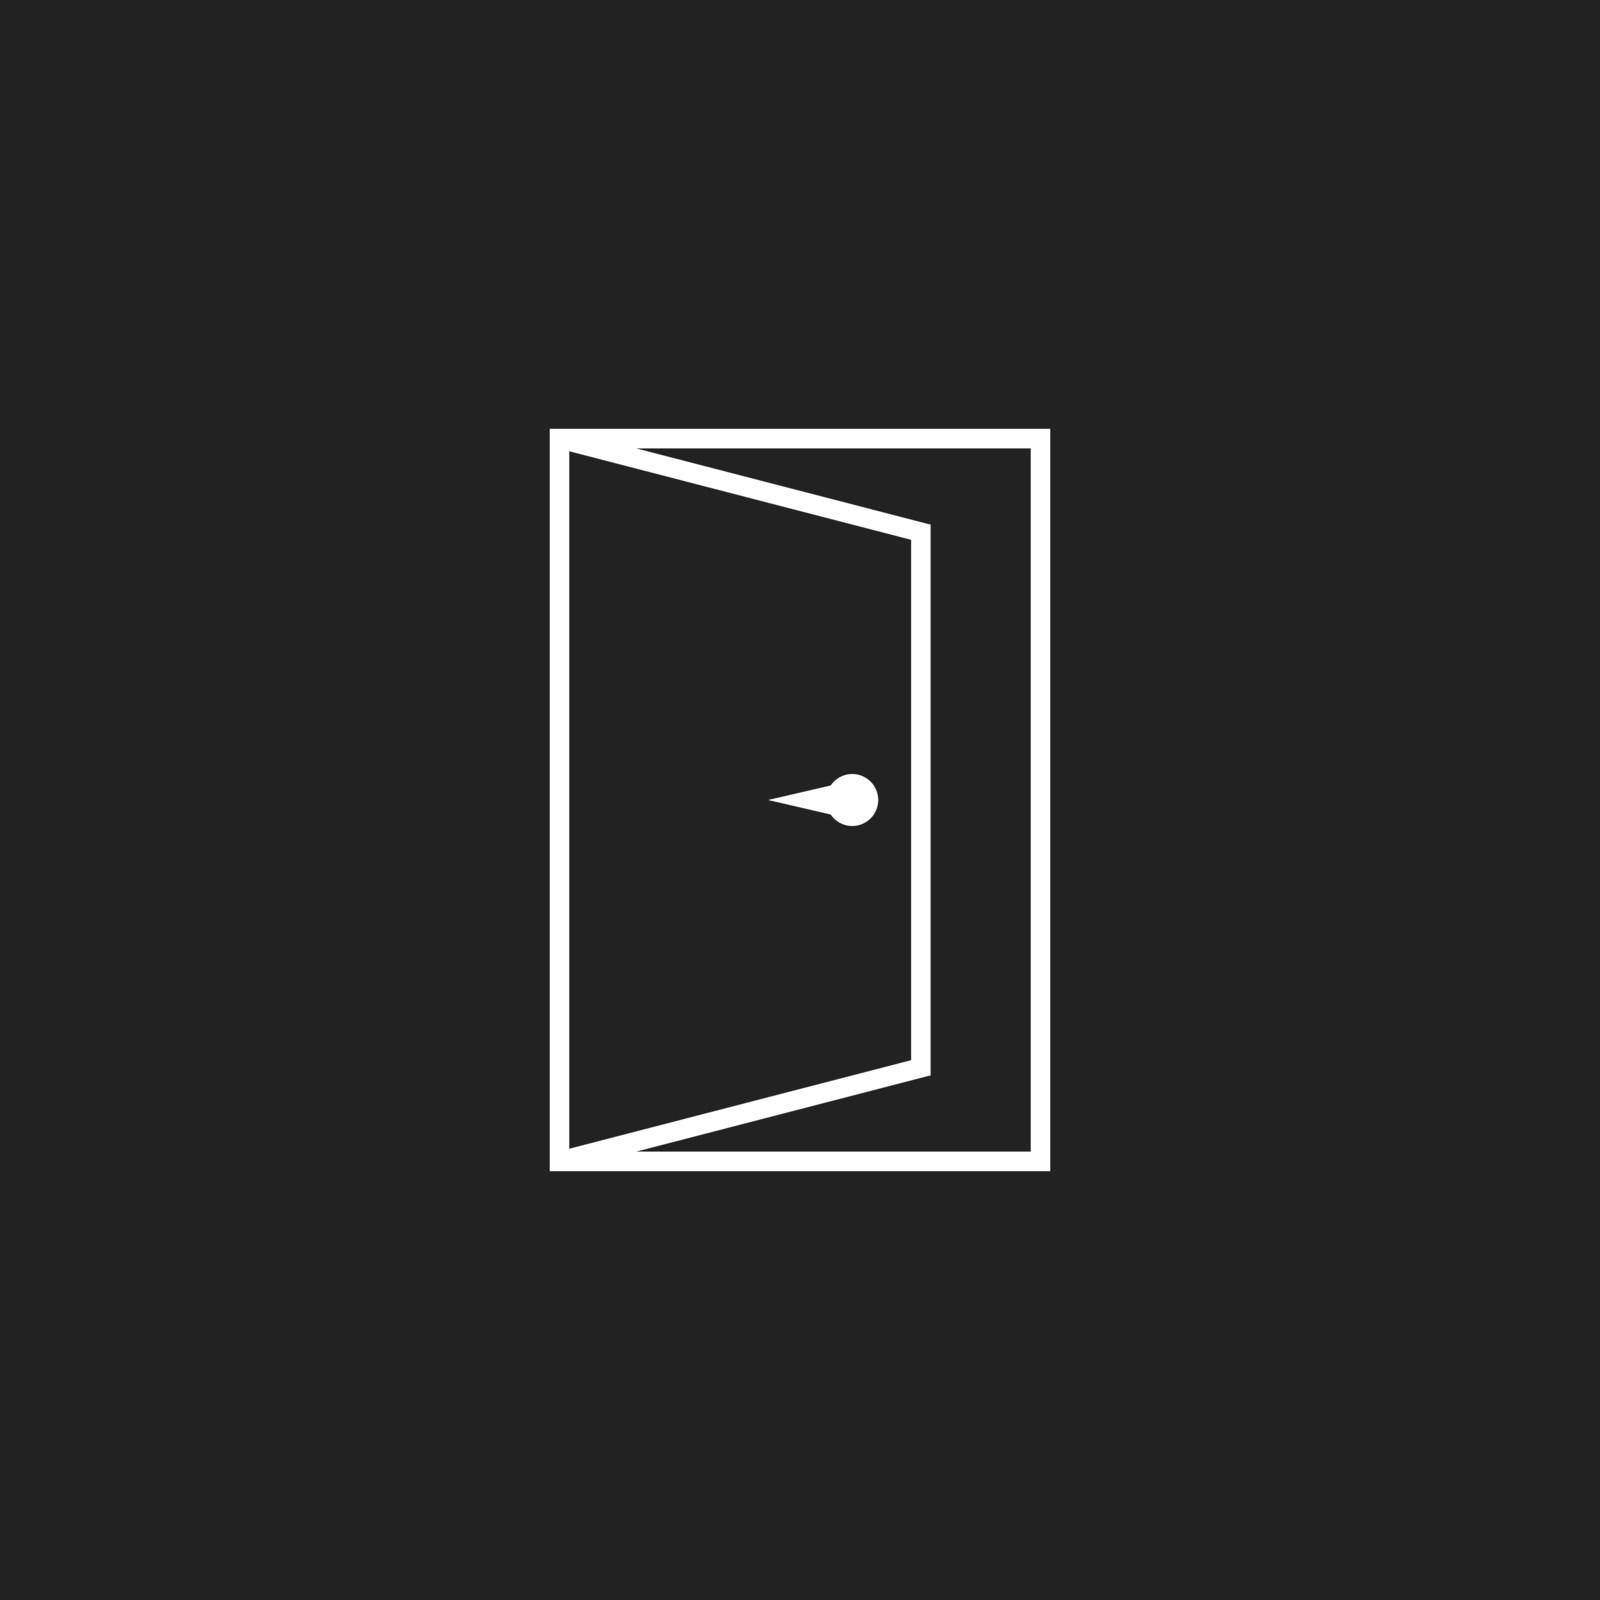 Door vector icon in line style. Exit icon. Open door illustration.